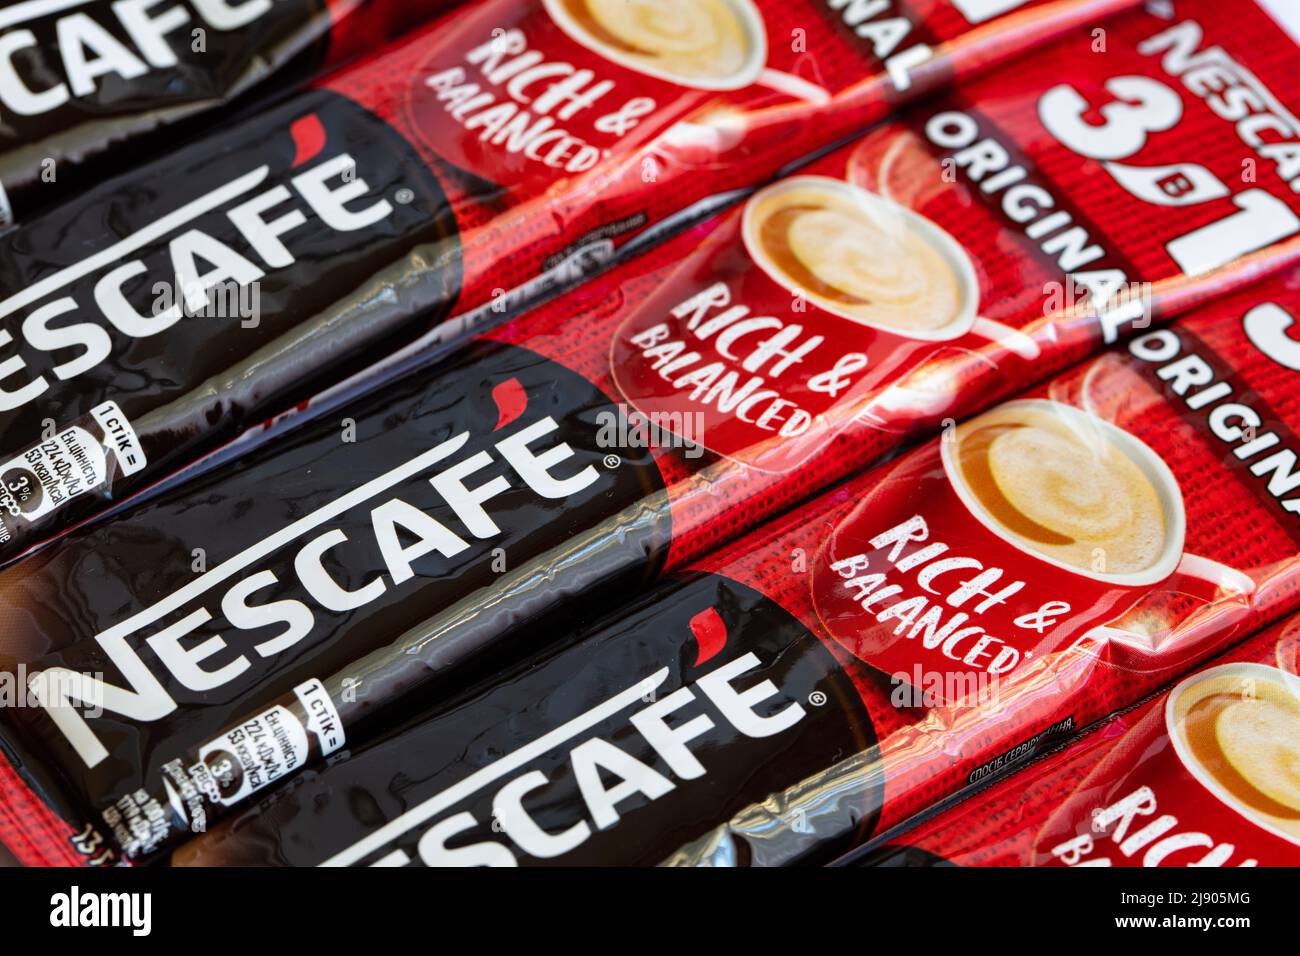 NESCAFÉ 3 in 1 Instant Coffee Sticks (Unboxing) Nestle Nescafé Original 3  en 1 El café Instantáneo 